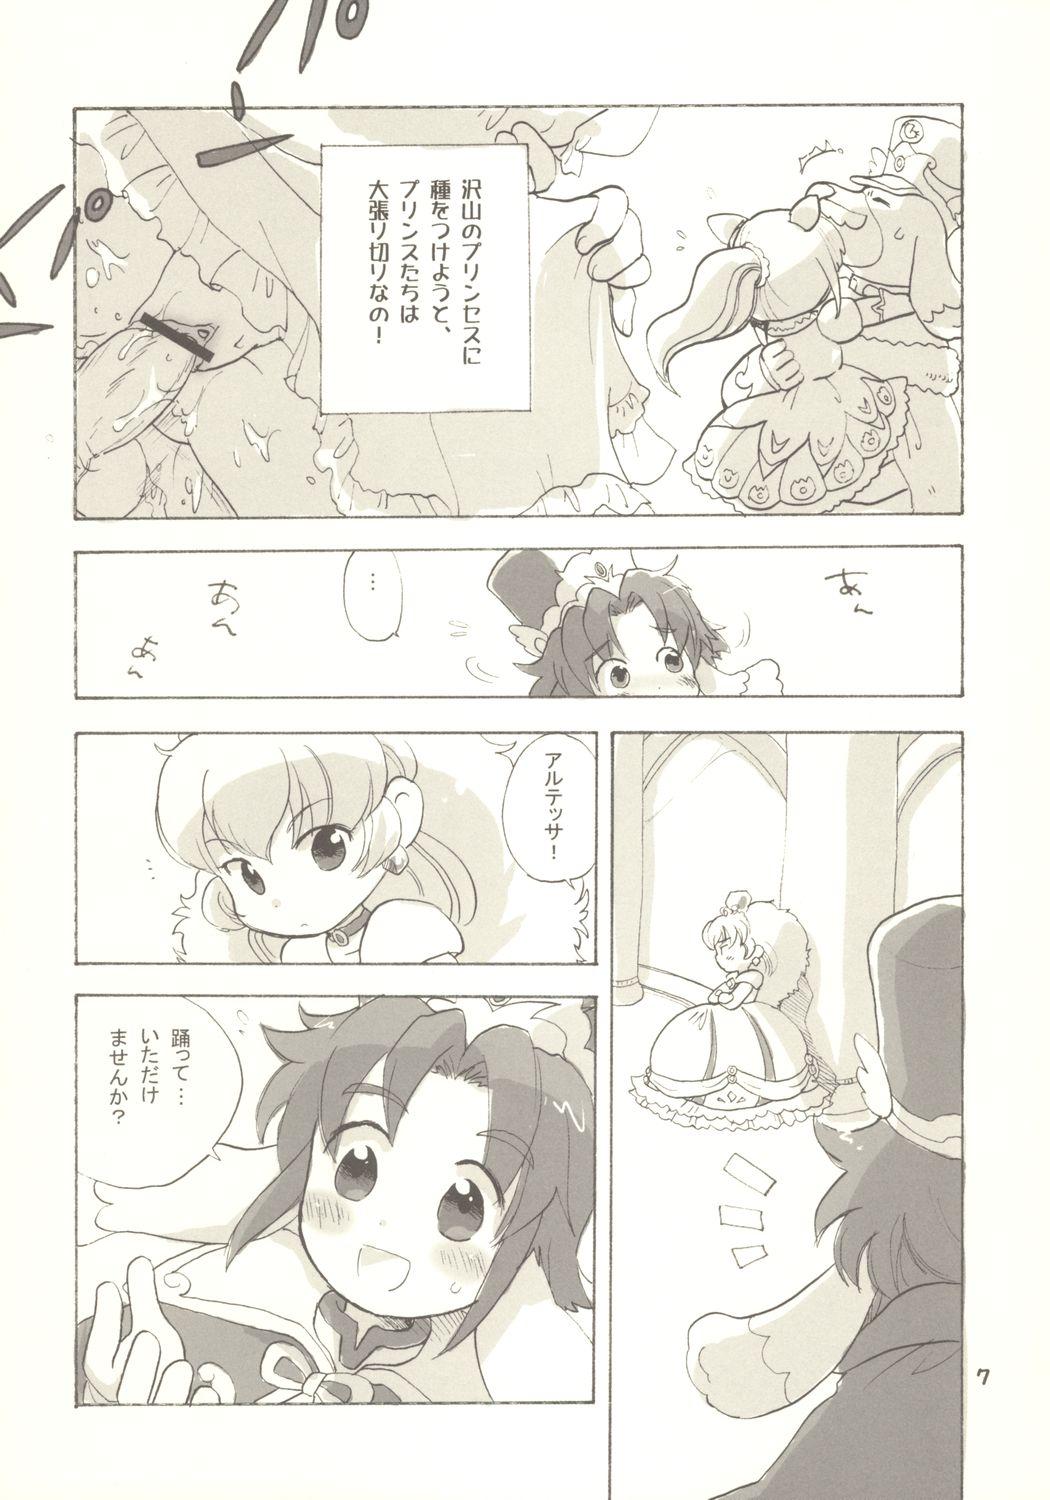 Anus Egao ni Nare - Please give me smiling face - Fushigiboshi no futagohime Ikillitts - Page 6